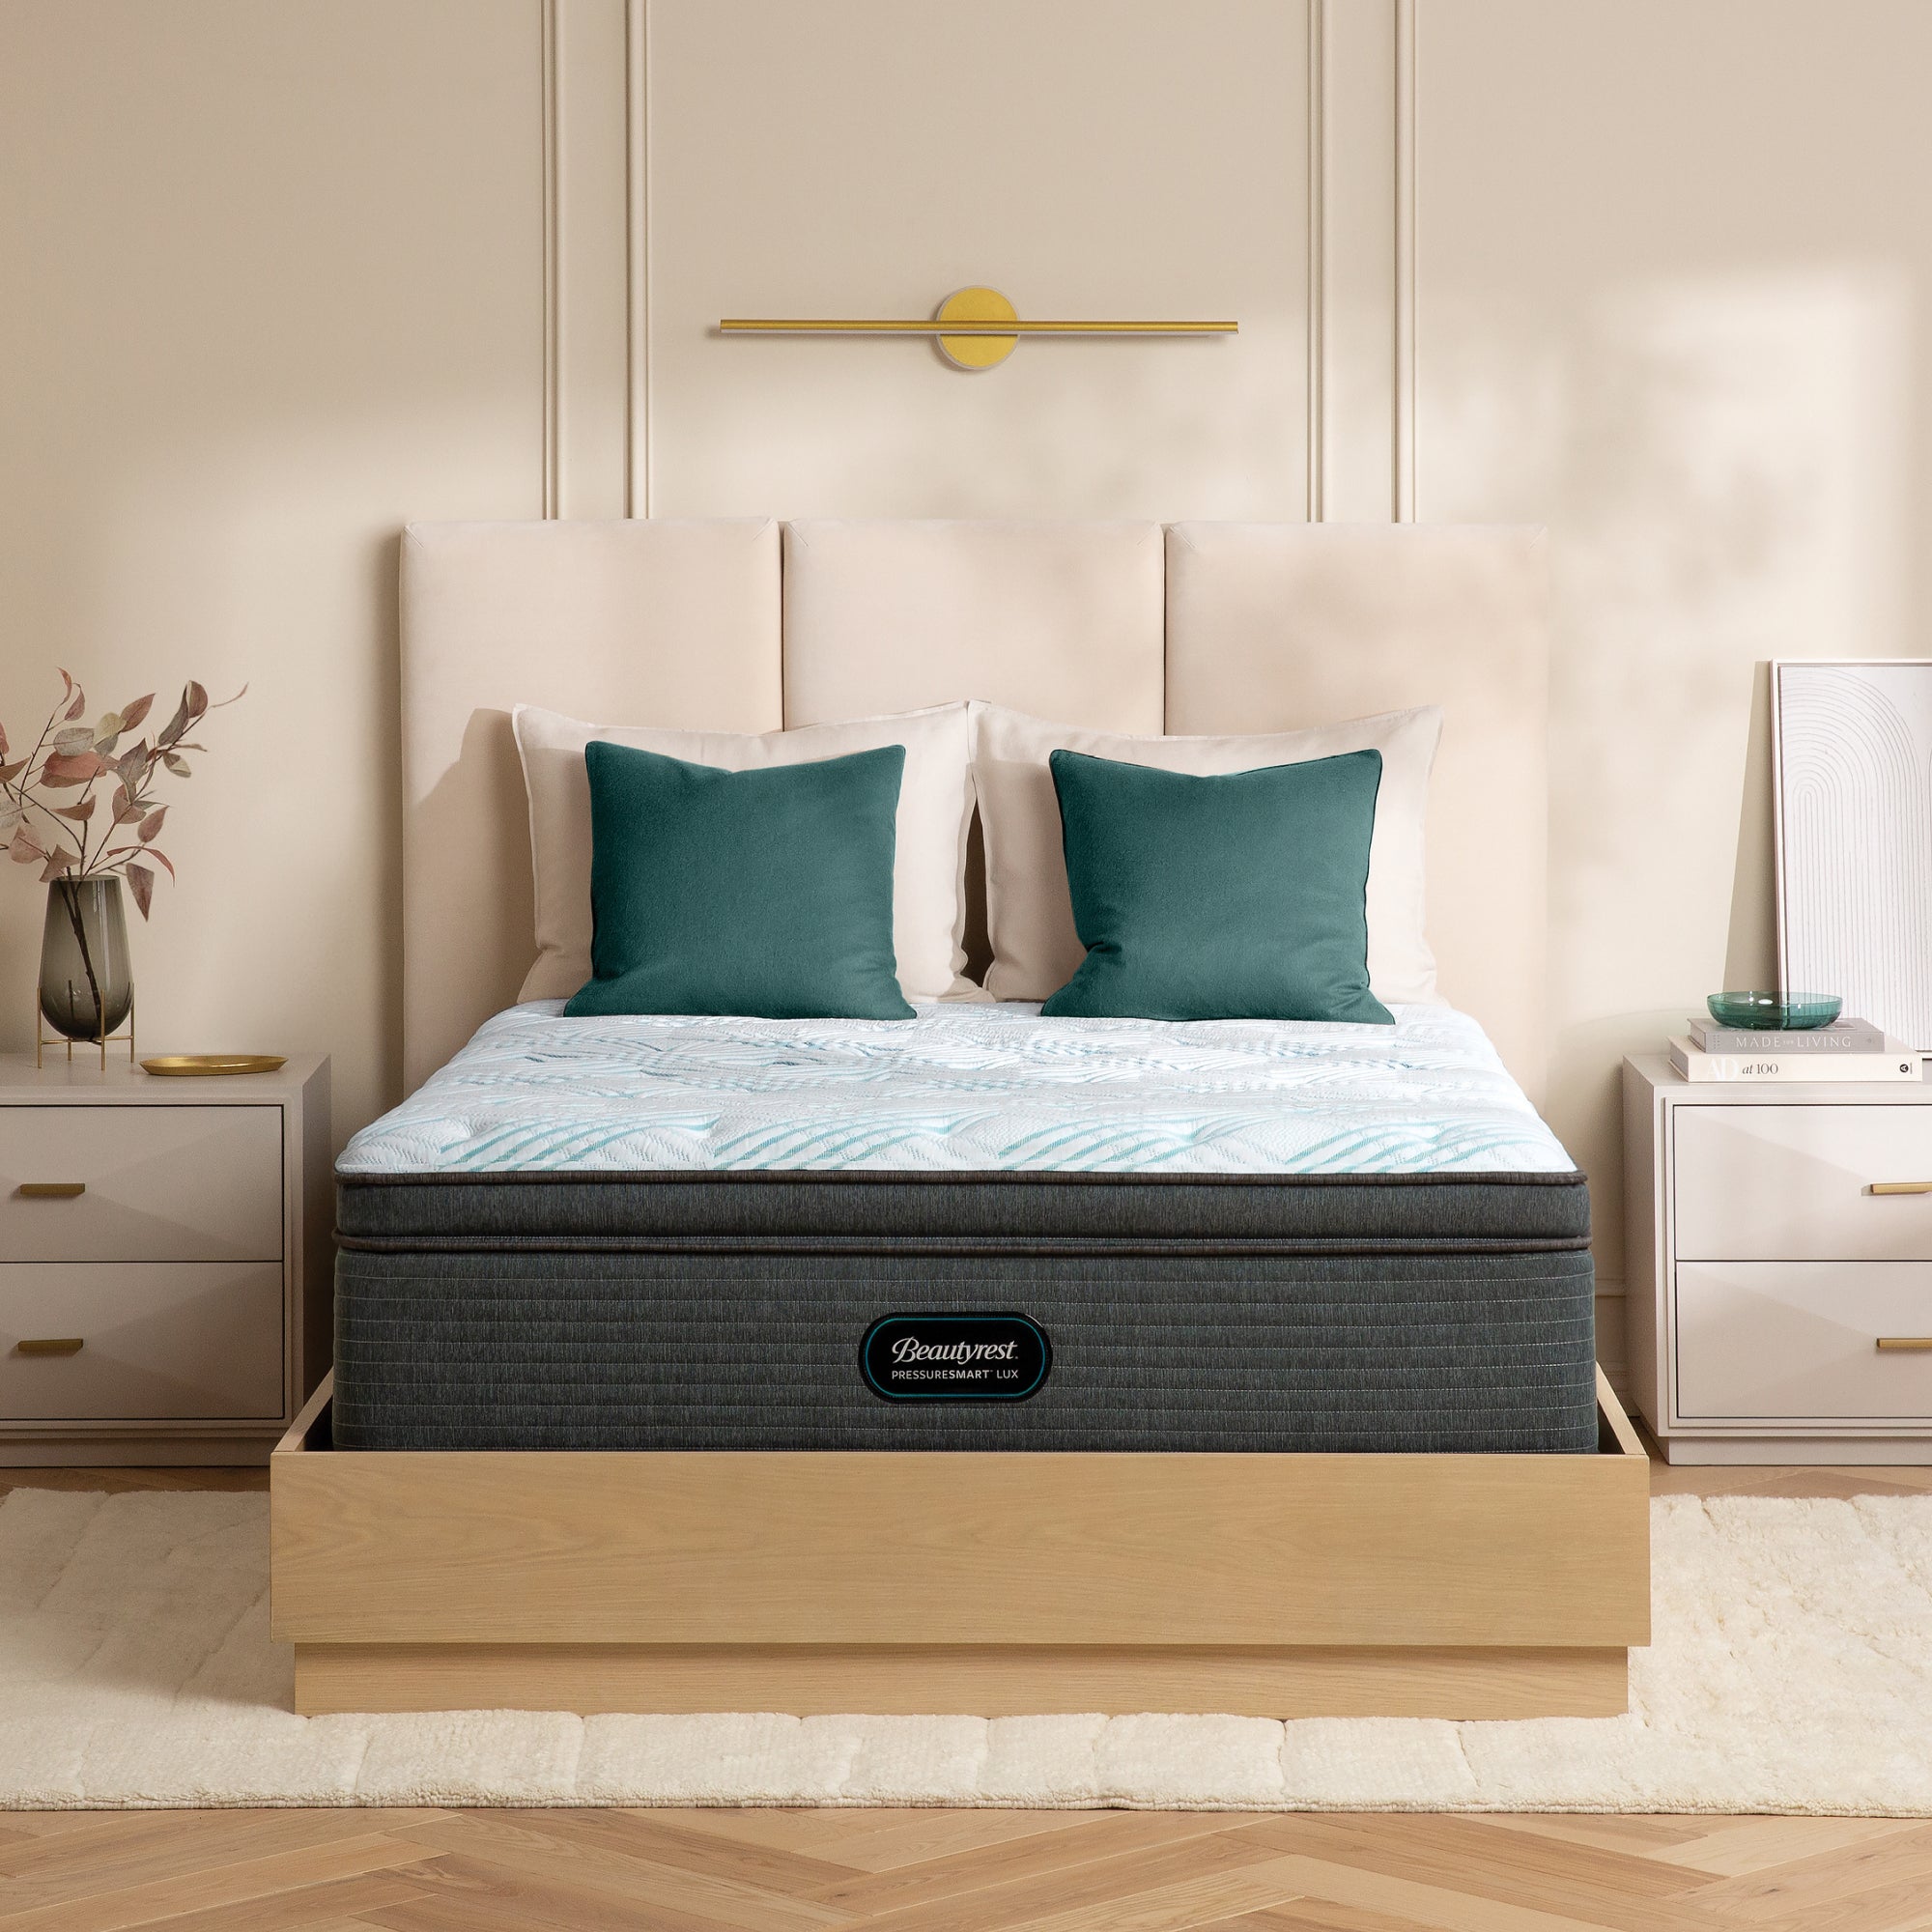 The Beautyrest PressureSmart mattress in a bedroom||feel: firm pillow top||series: lux